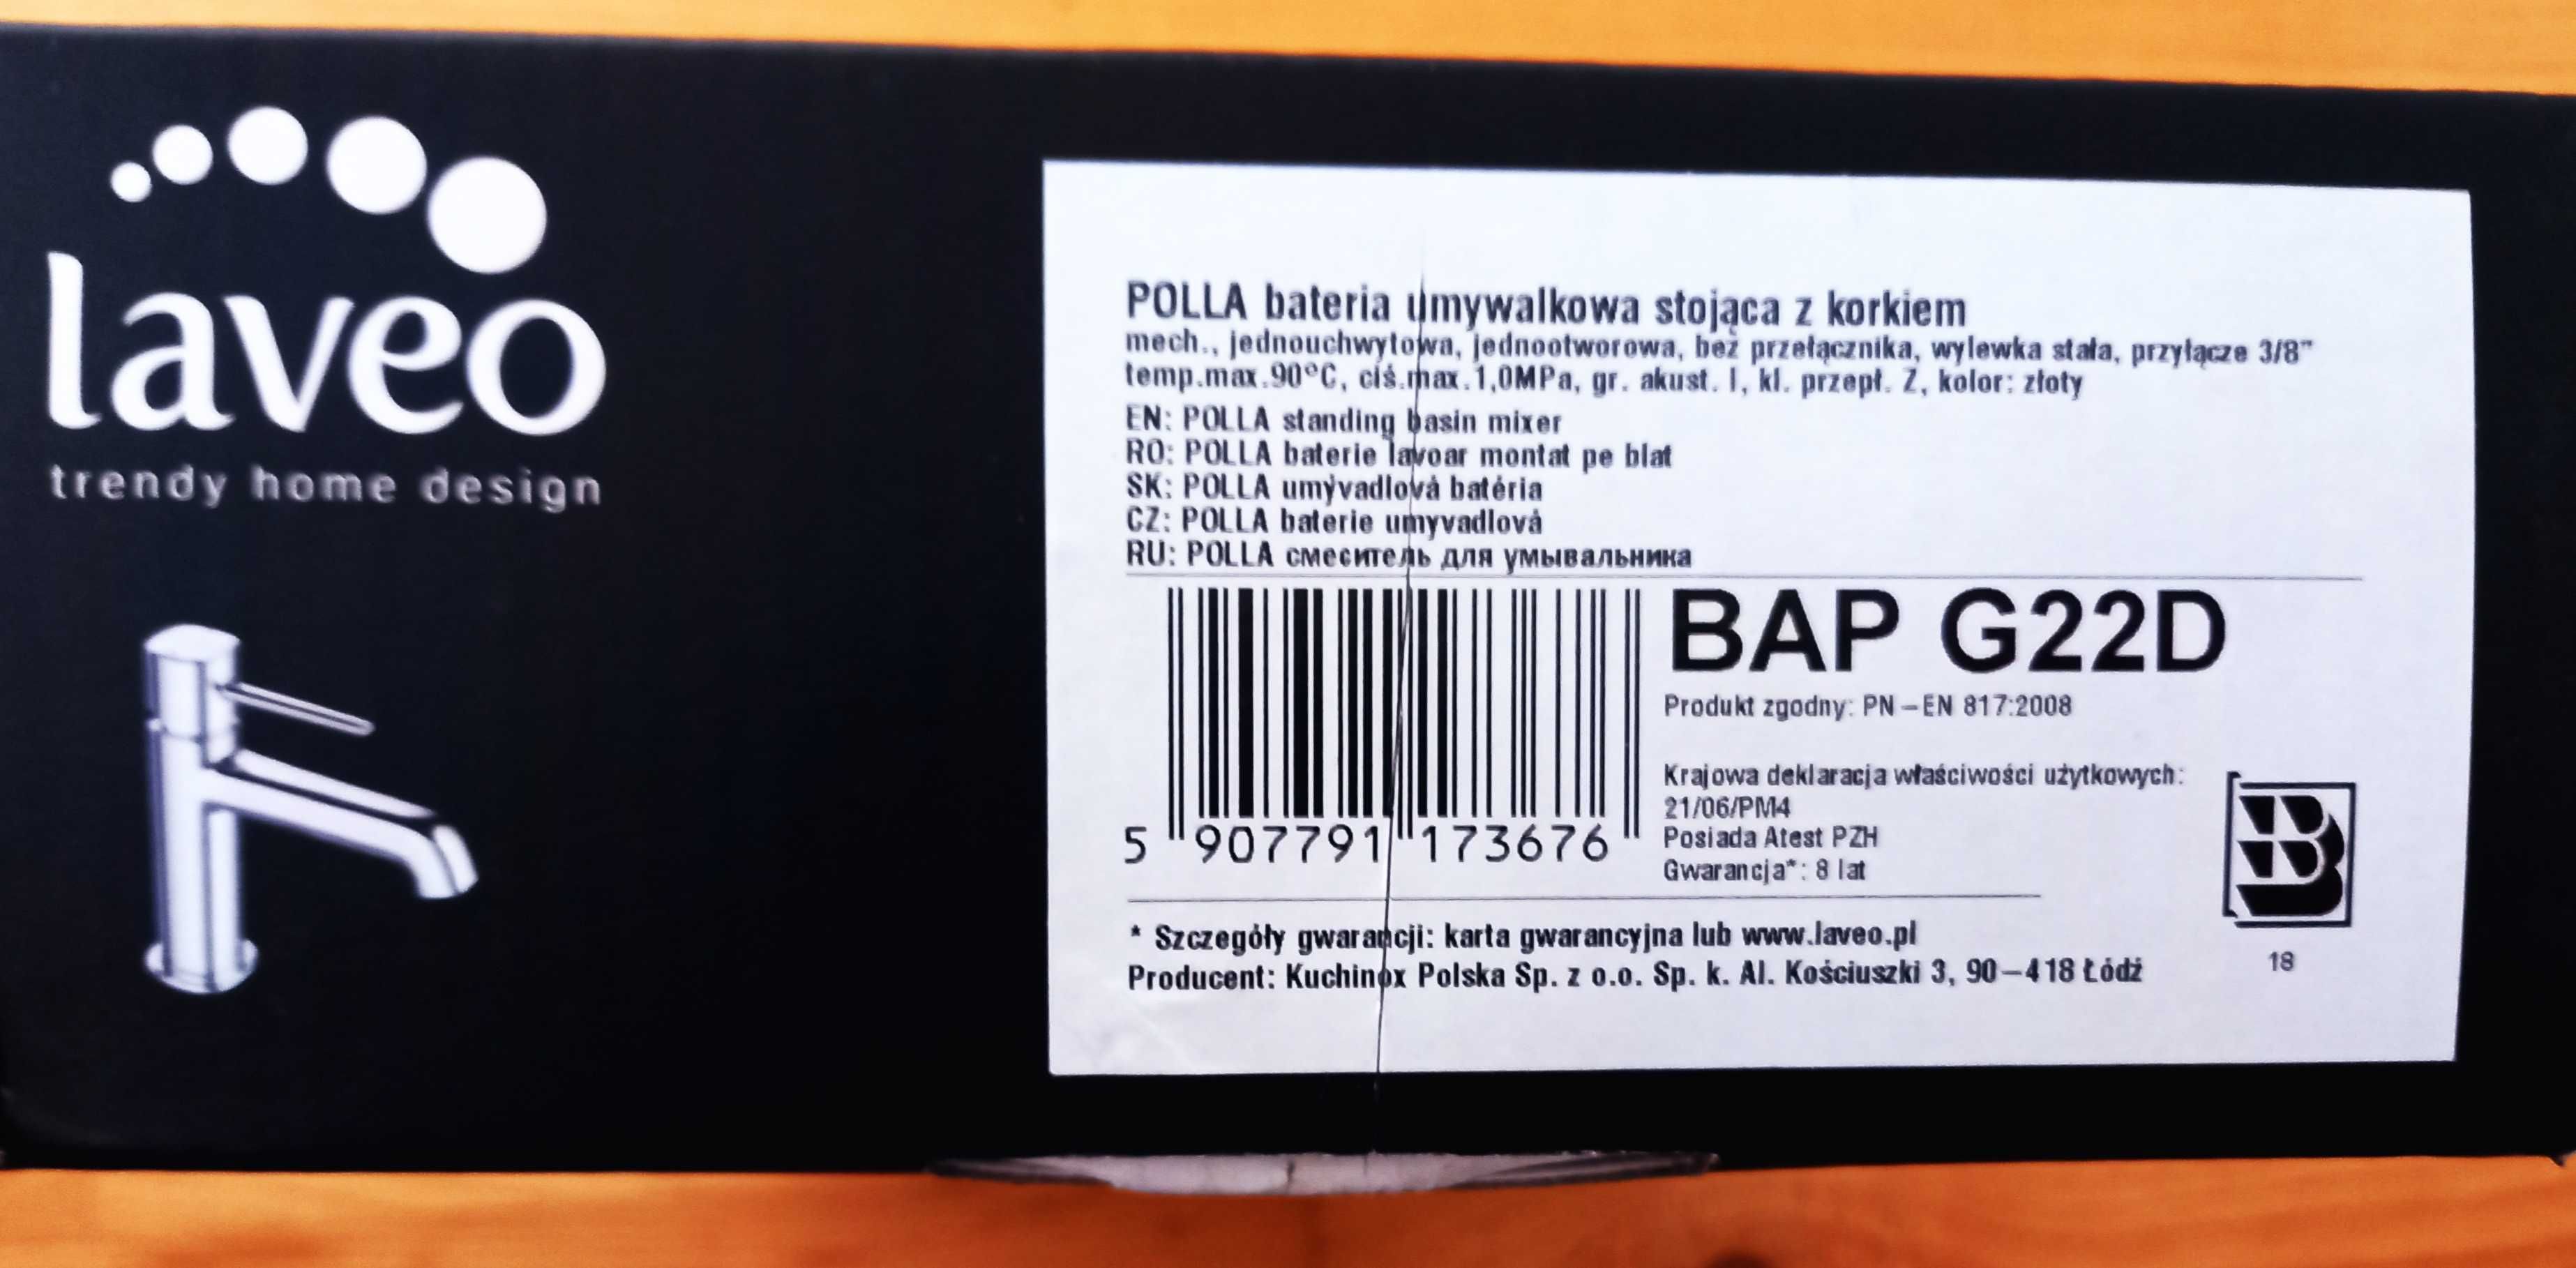 Nowa bateria umywalkowa, marki LAVEO BAP G22D, kran, kol.złoty